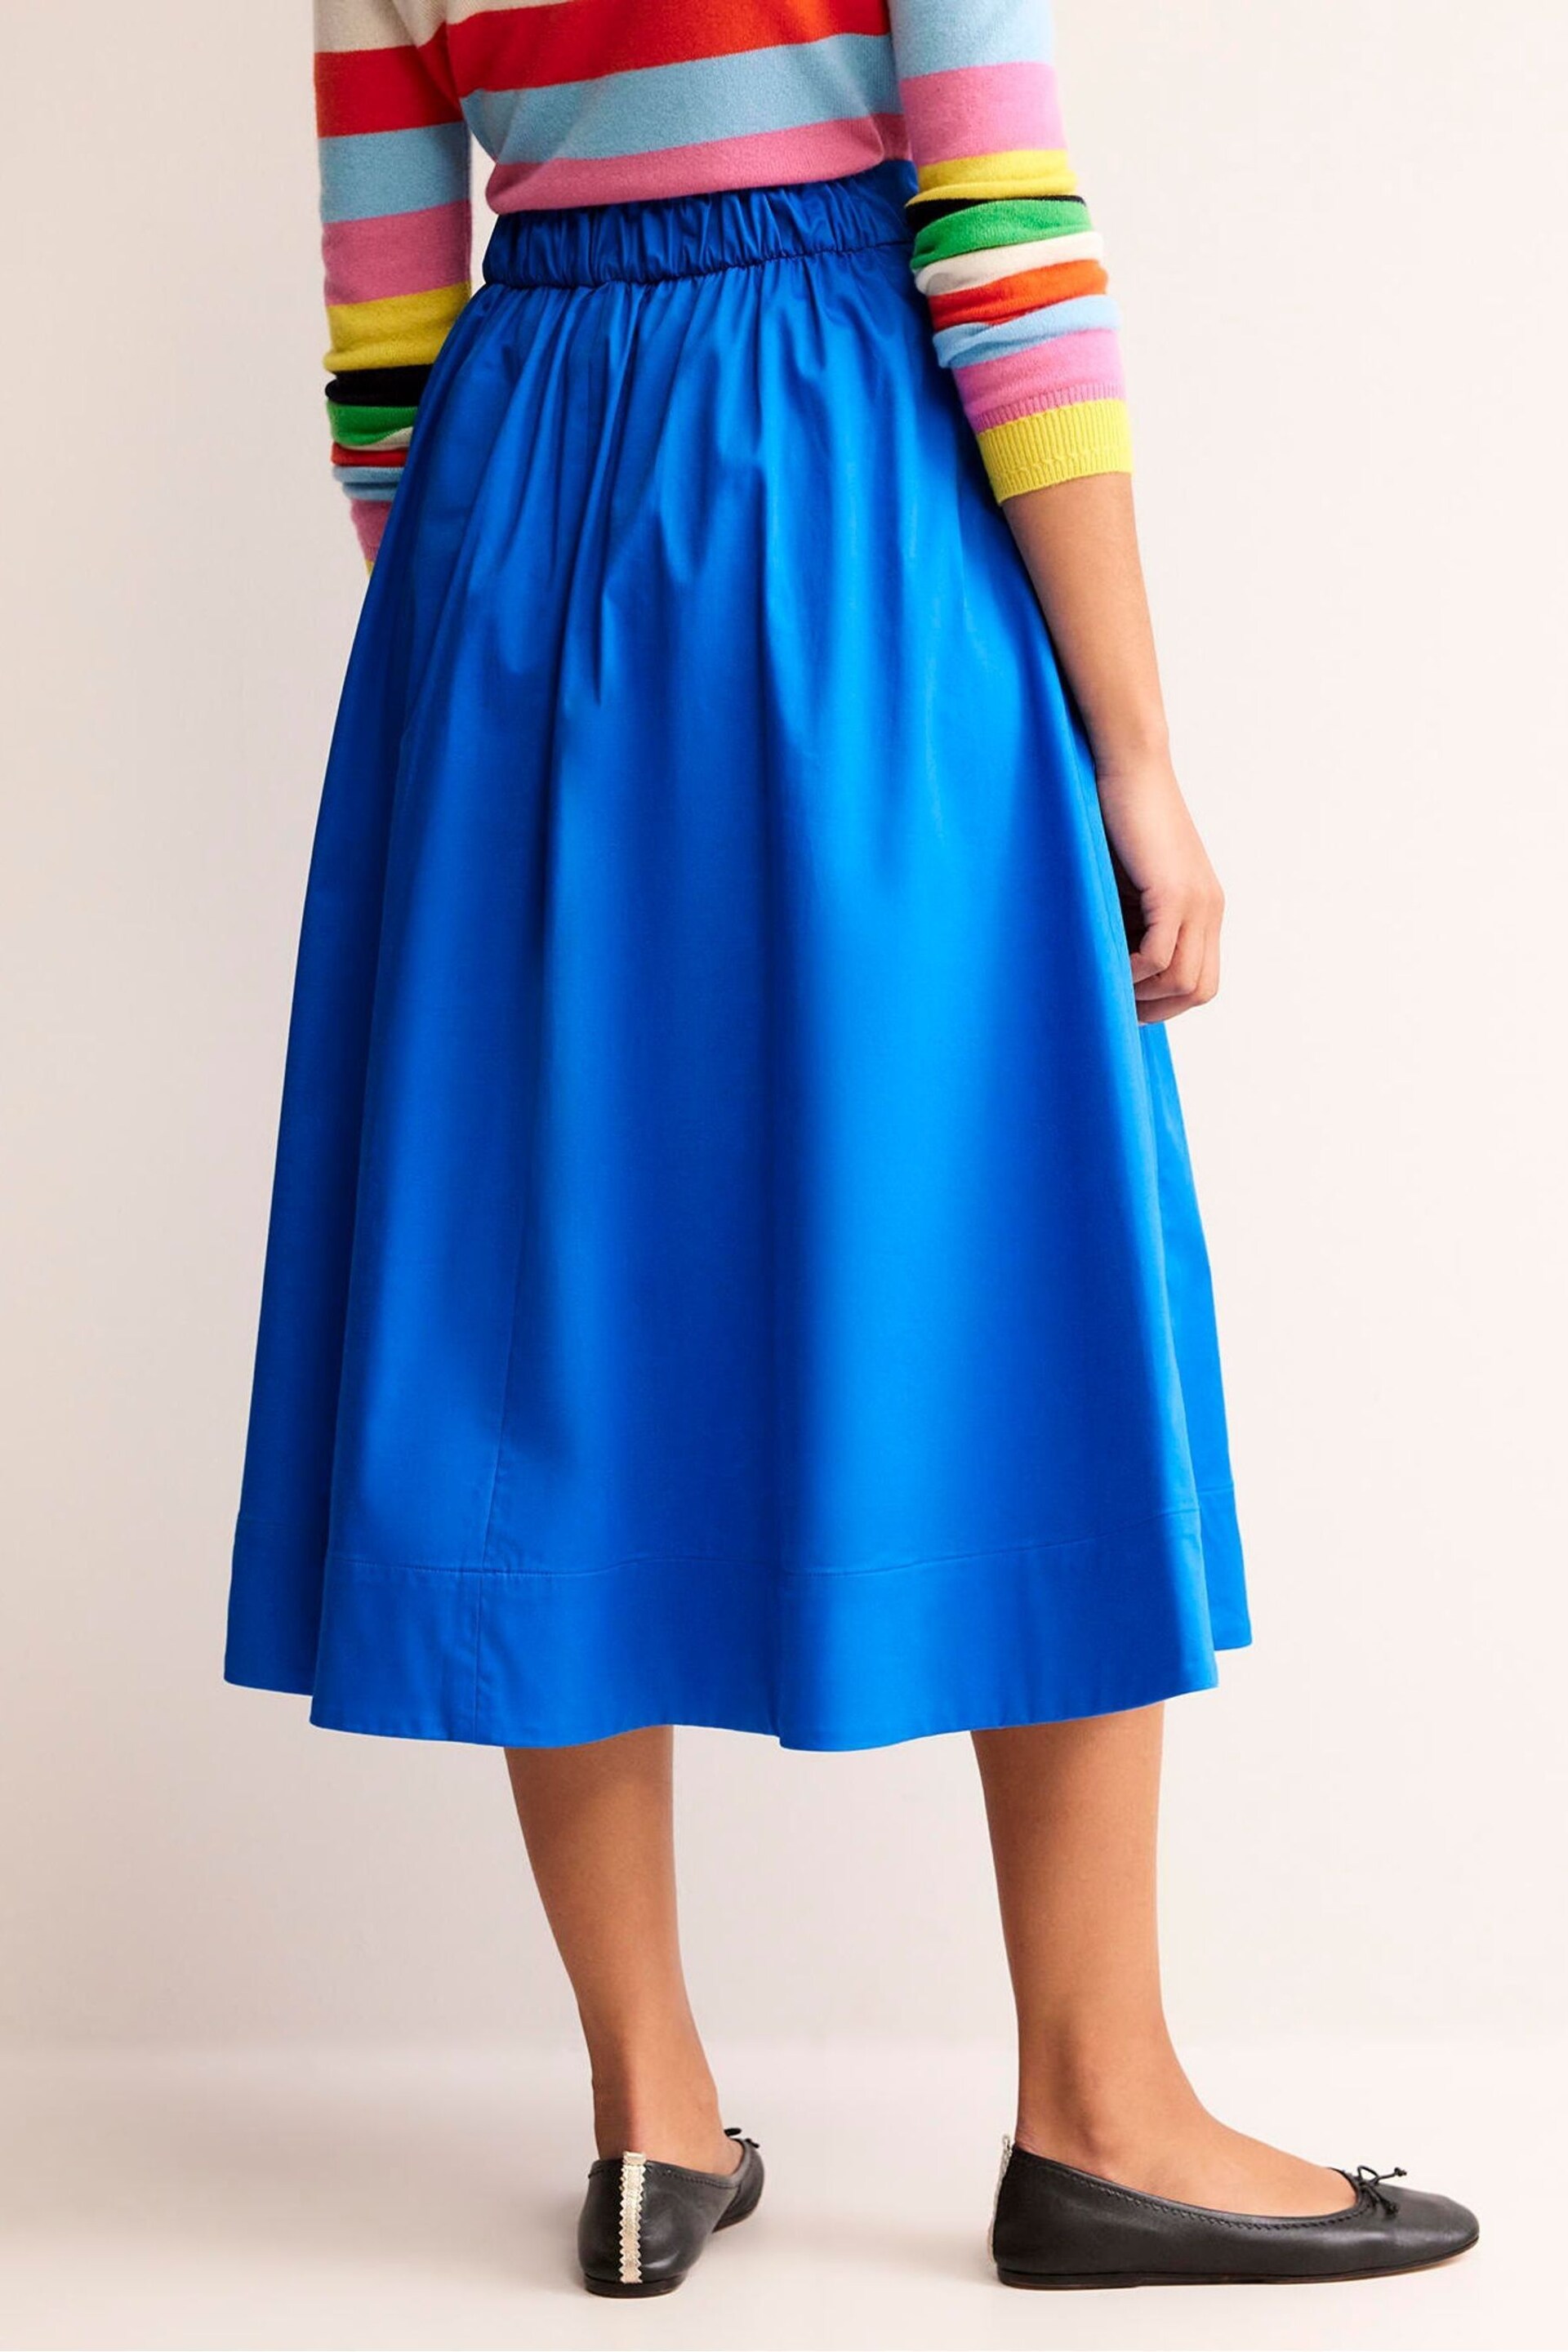 Boden Blue Isabella Cotton Sateen Skirt - Image 3 of 5